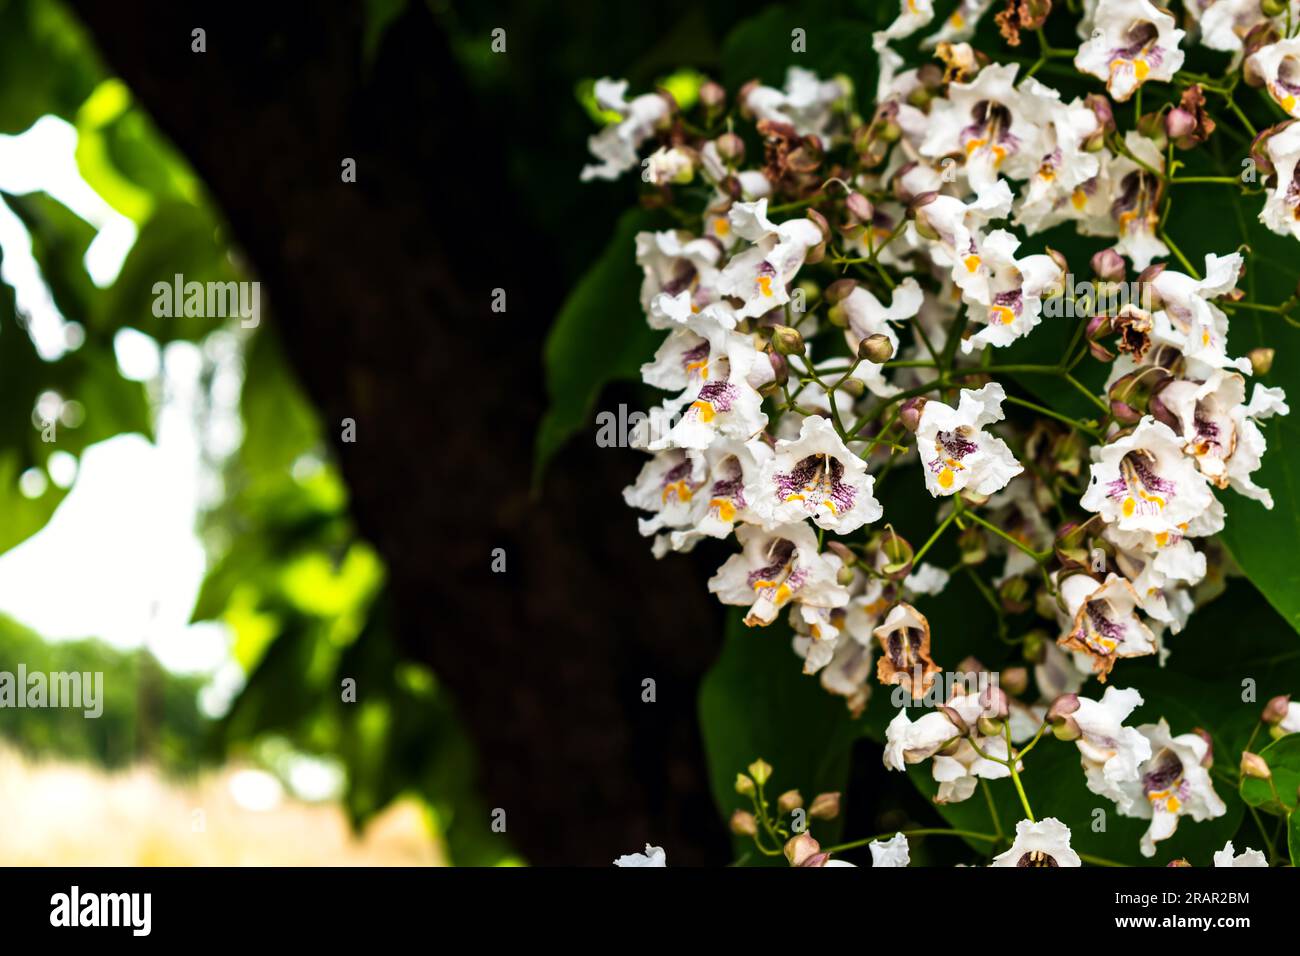 Catalpa tree with flowers and leaves, catalpa bignonioides, catalpa speciosa or cigar tree Stock Photo